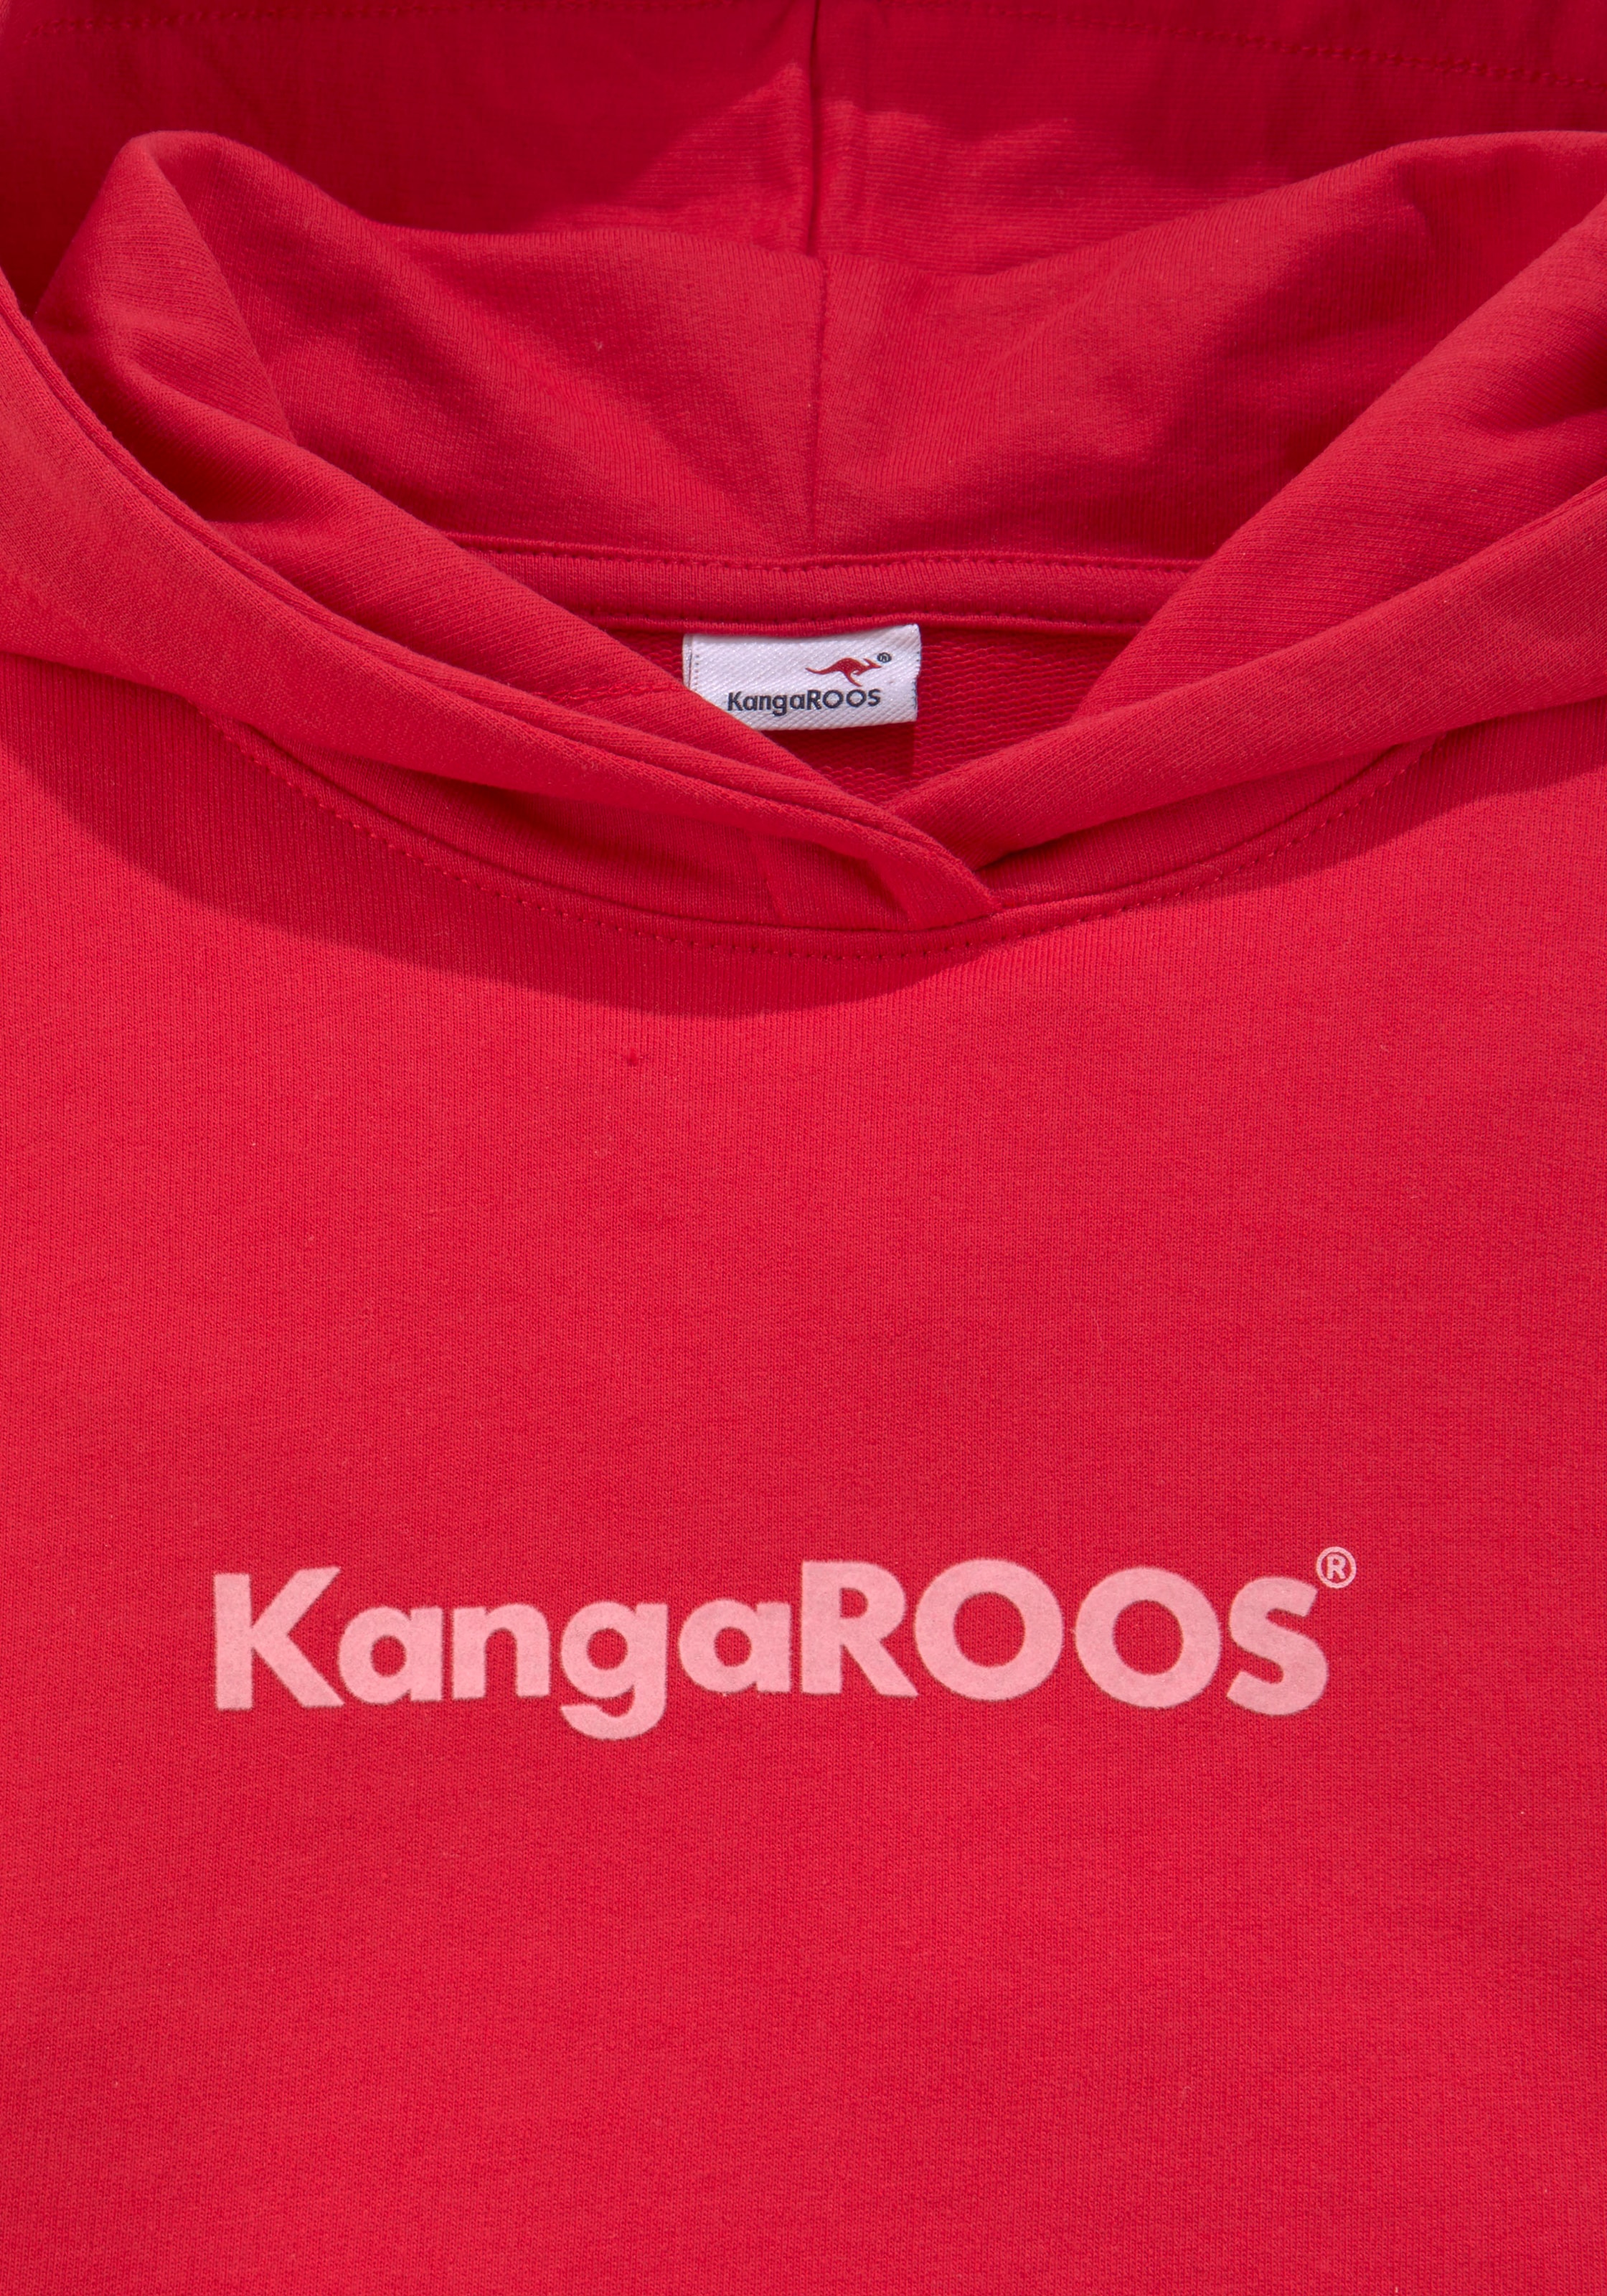 KangaROOS Kapuzensweatshirt, mit Flockdruck